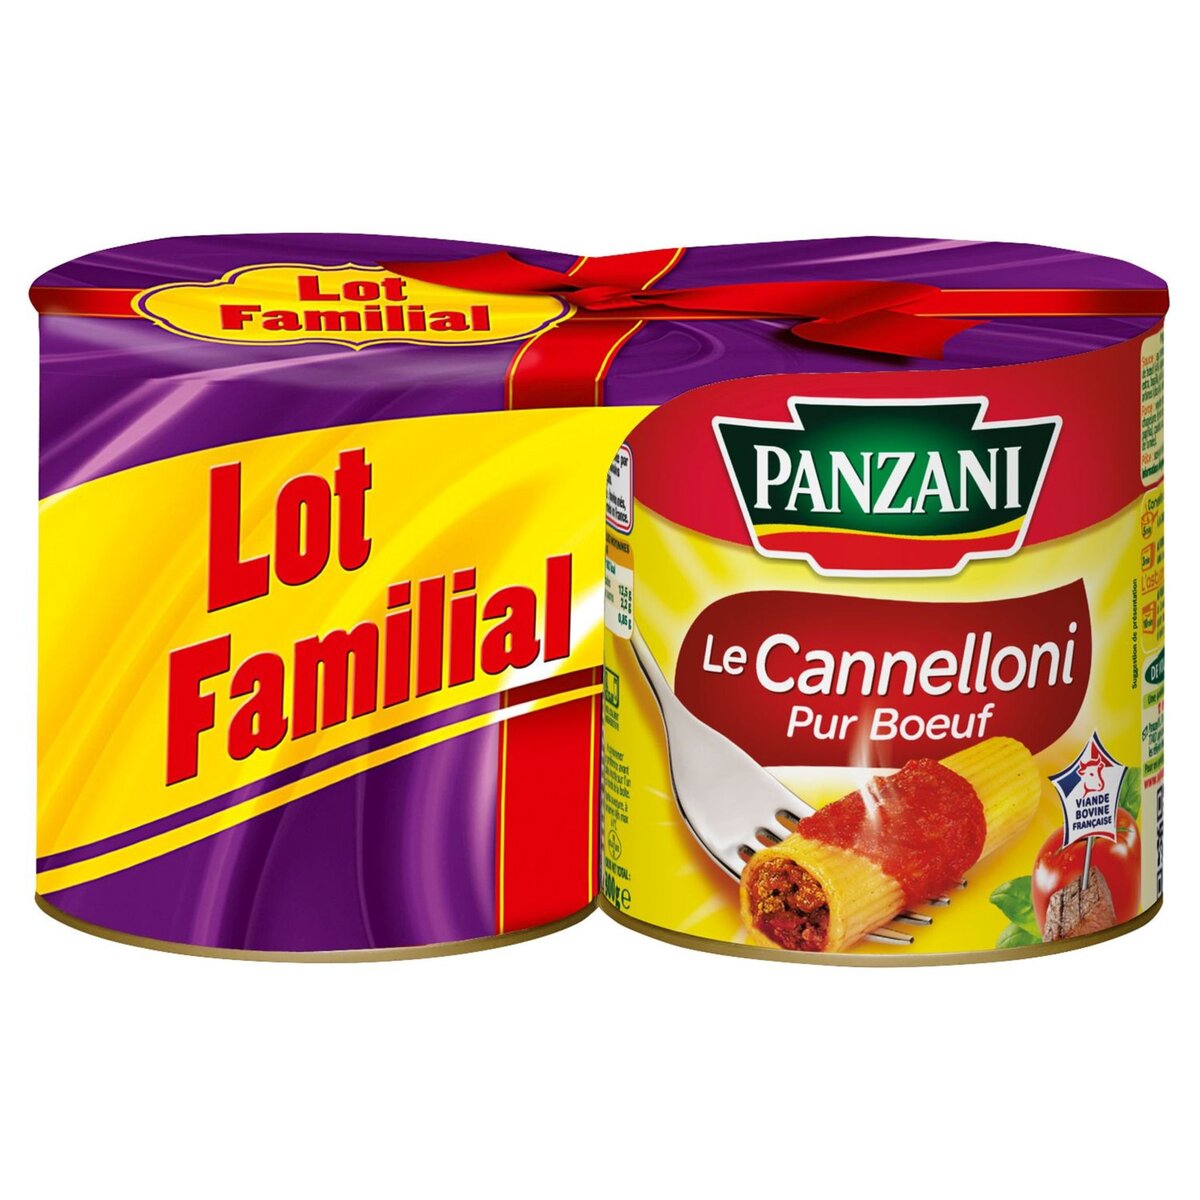 PANZANI Cannelloni pur bœuf, viande bovine française lot familial 2x800g